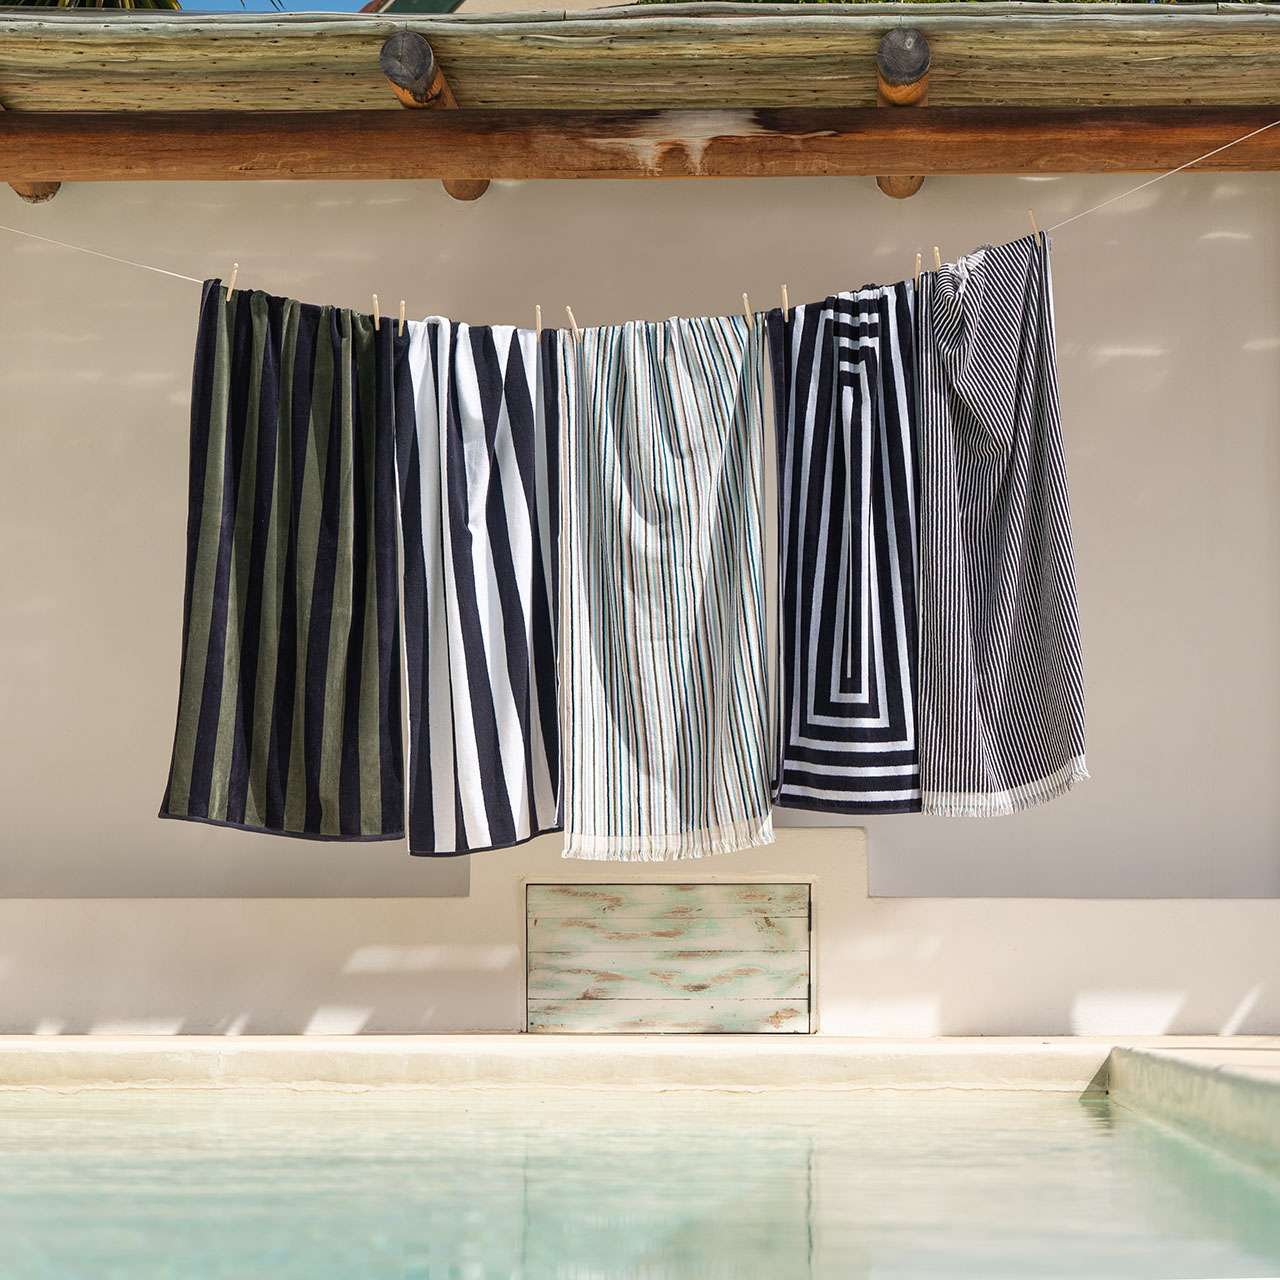 Striped Cabana Cotton Terry Beach Towel - Black